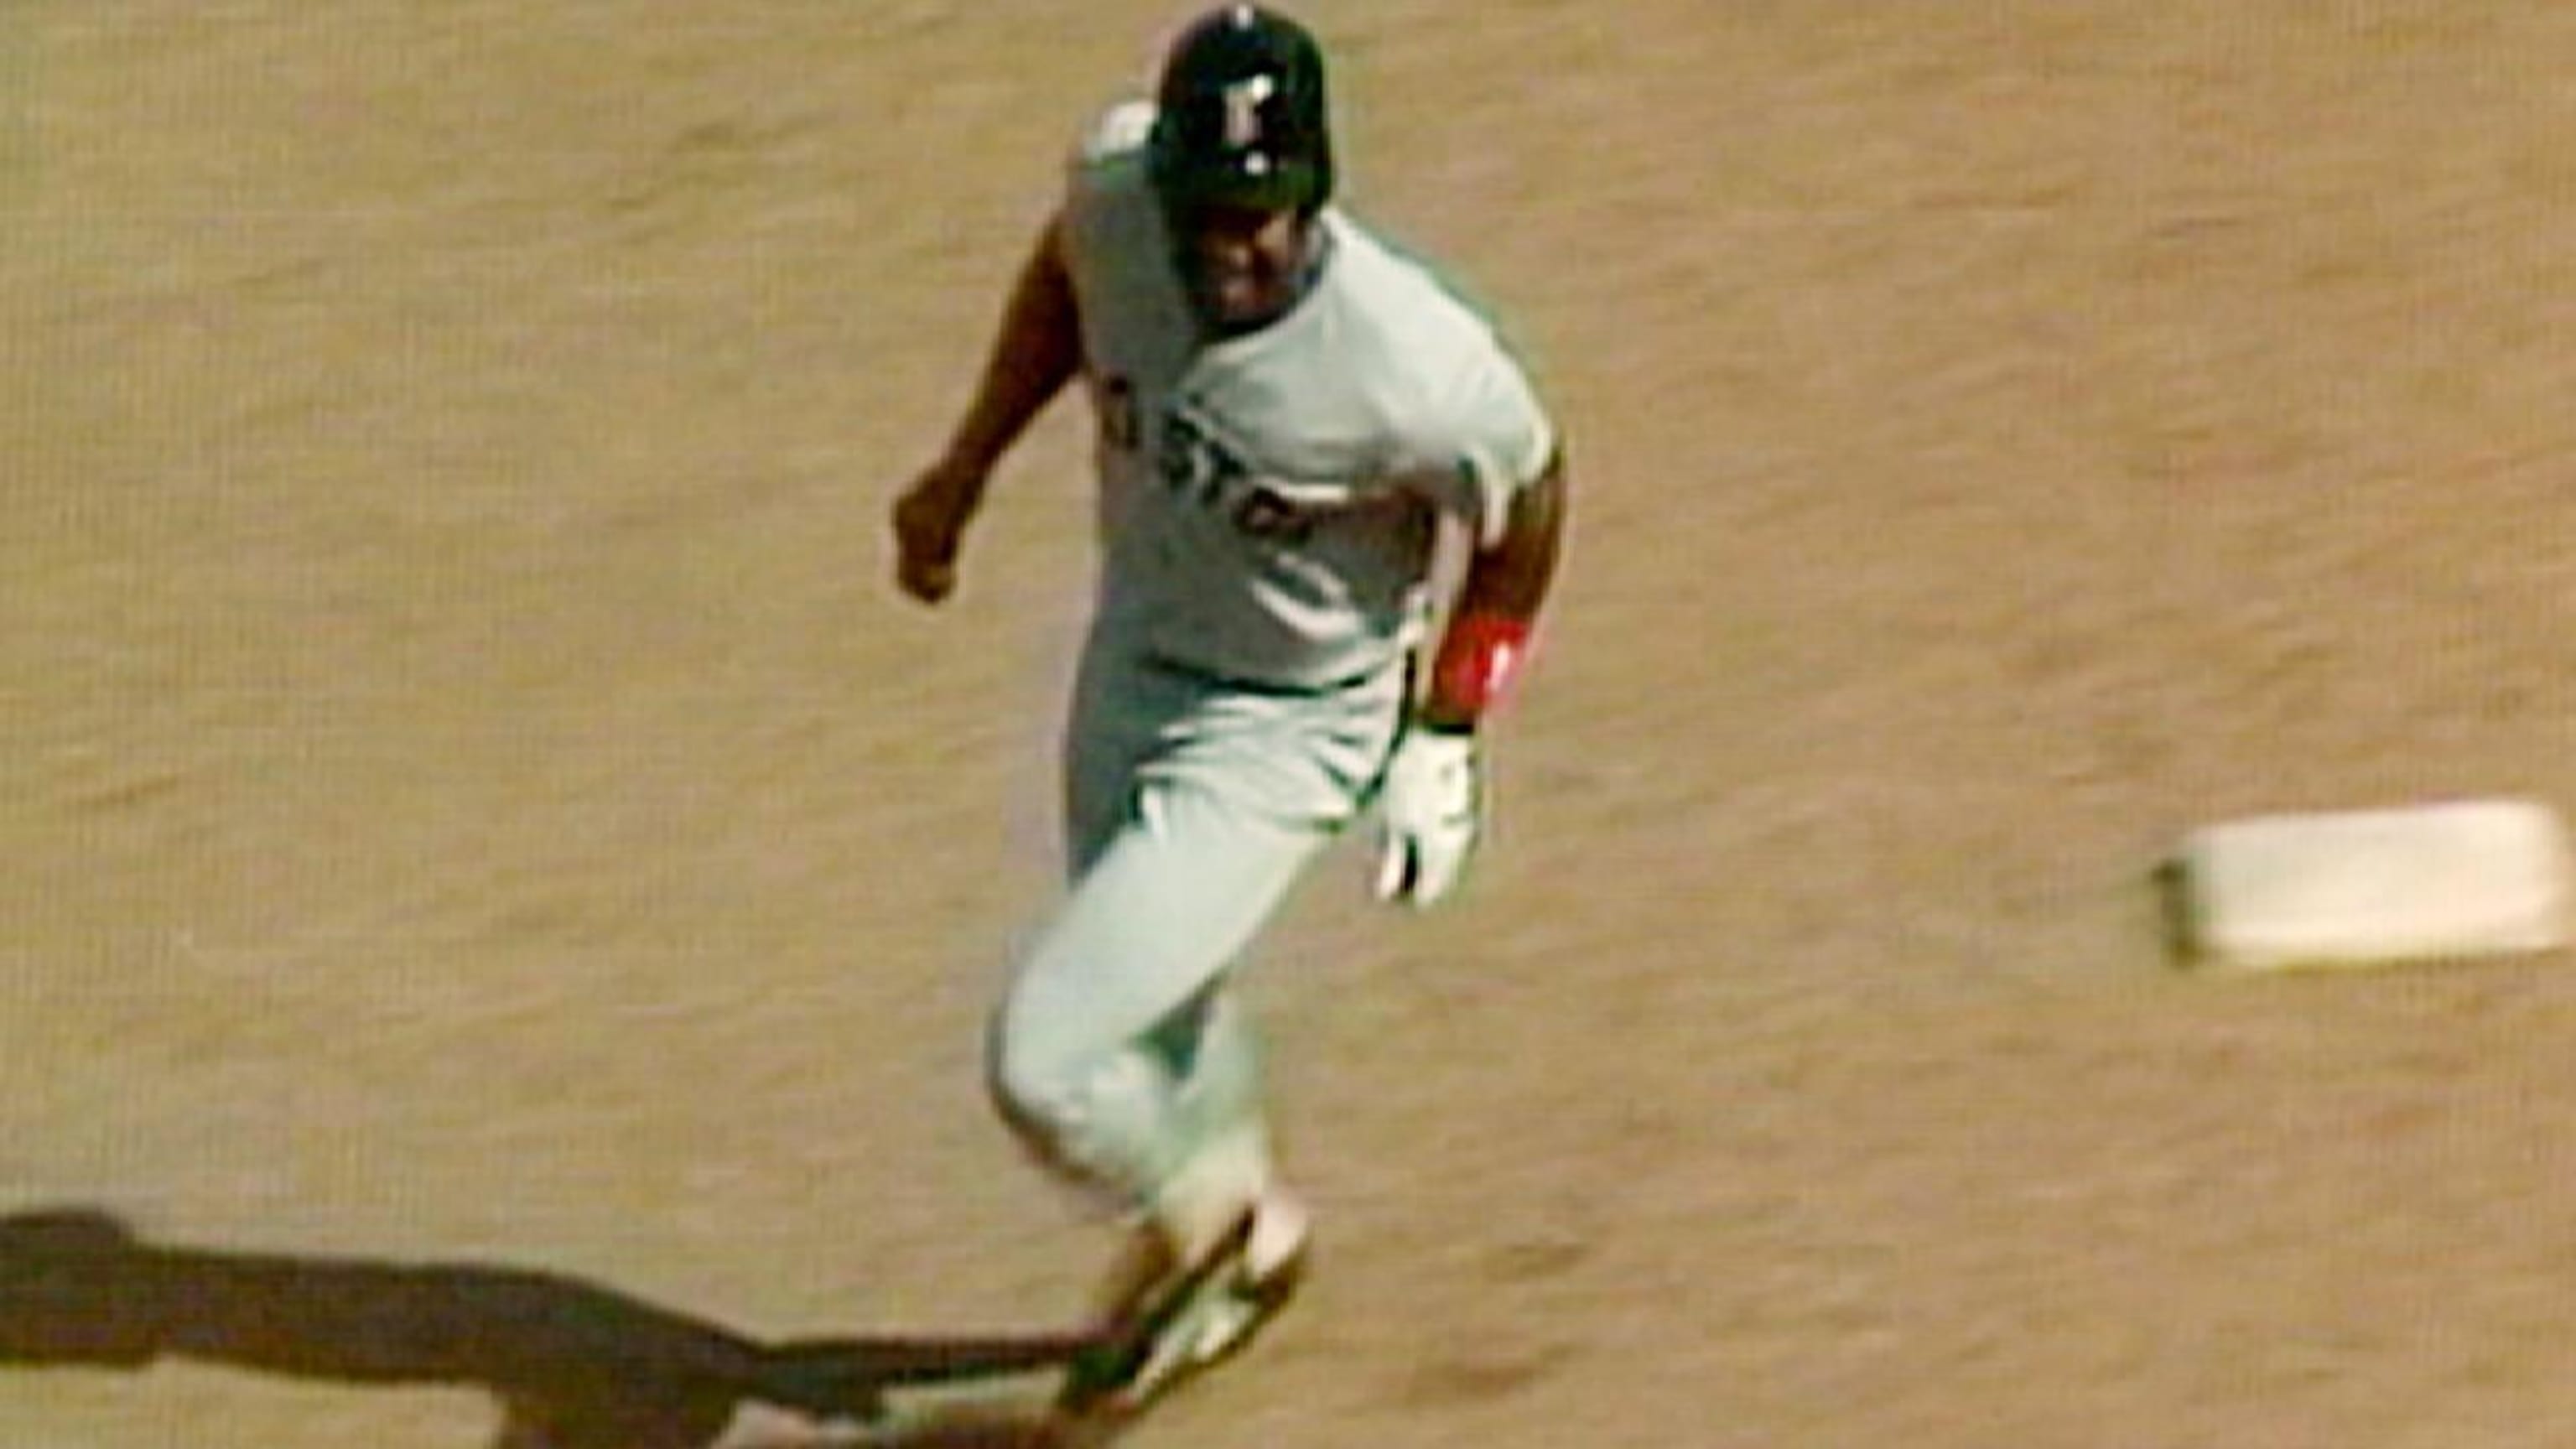 1986 Mookie Wilson World Series Game Six Worn Cleats. Baseball